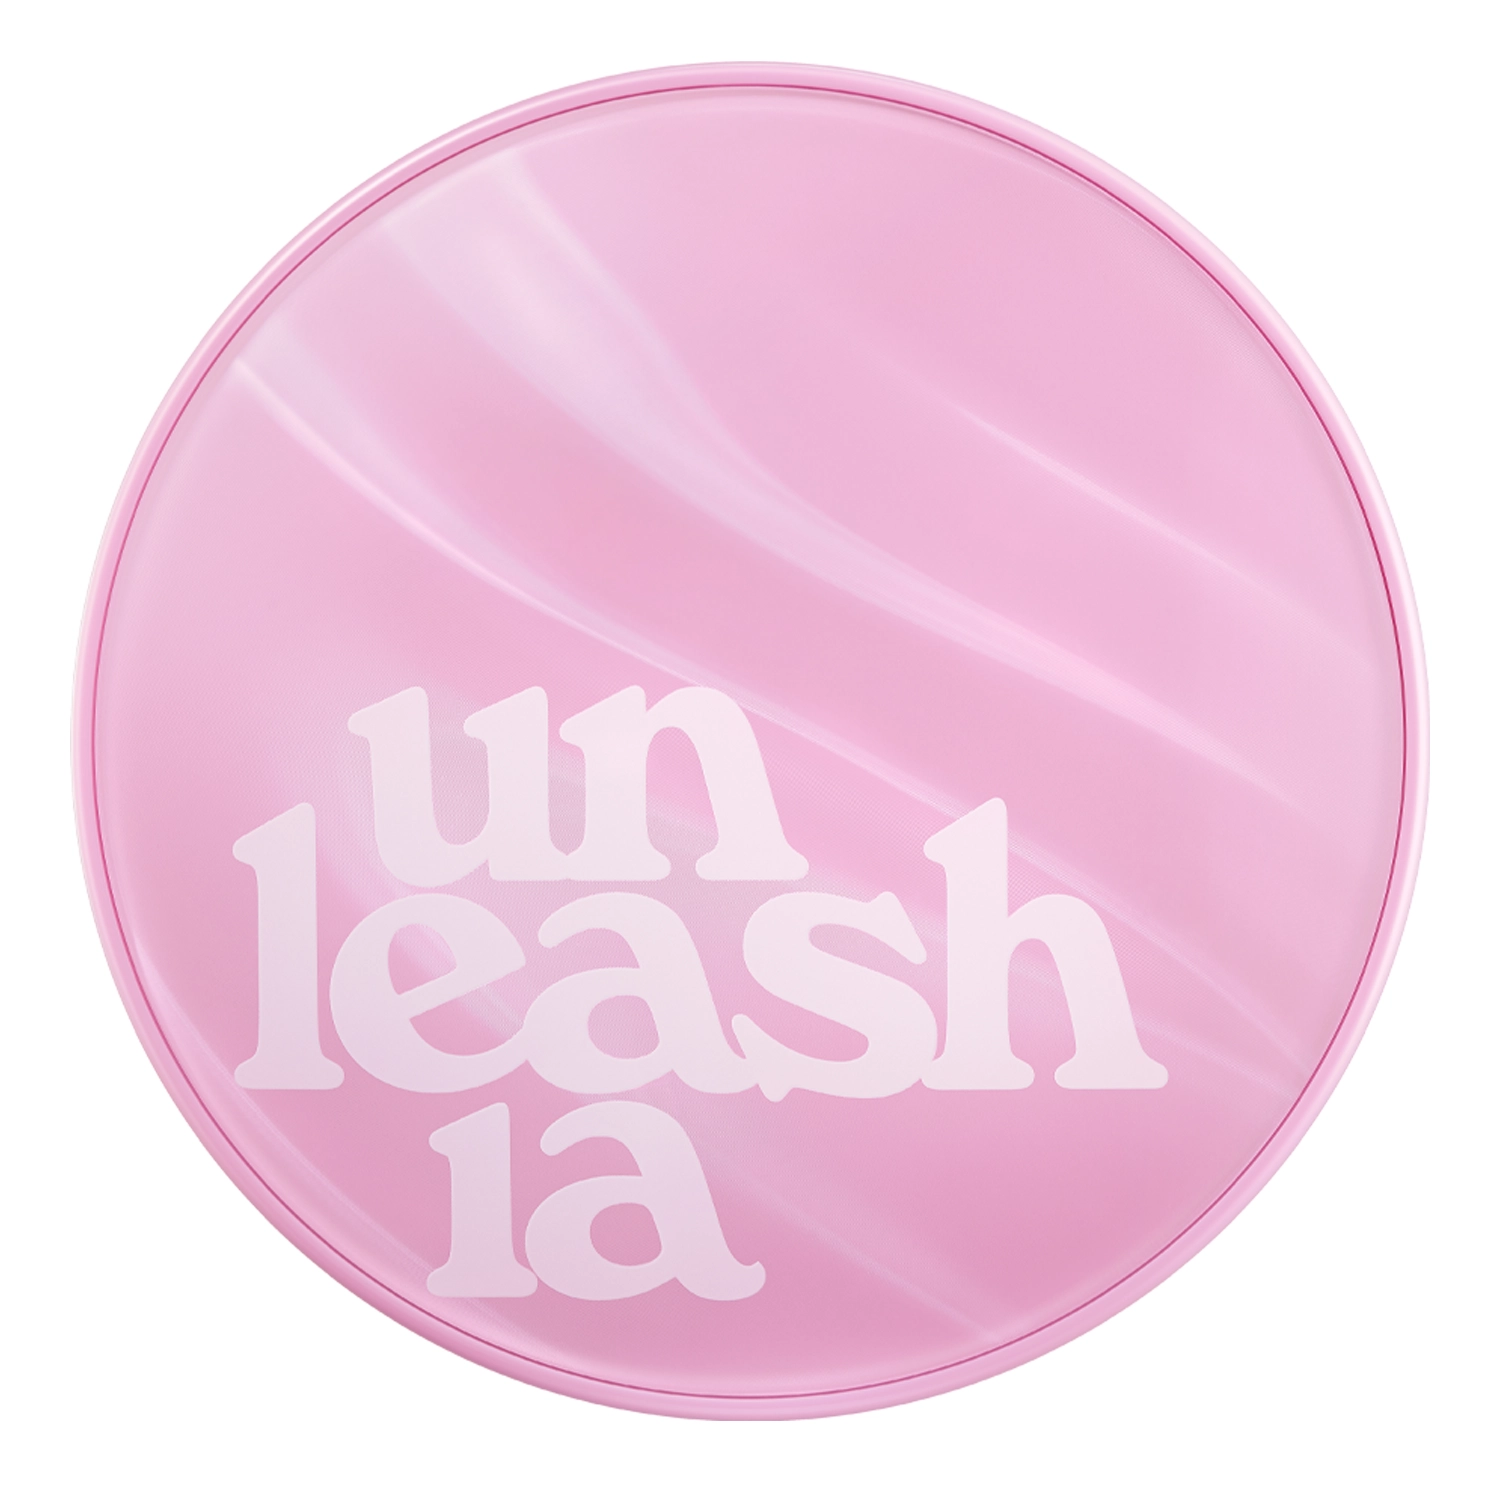 Unleashia - Don't Touch Glass Pink Cushion SPF50+ PA++++ - Fond de ten Cushion - #23W With Care - 15g